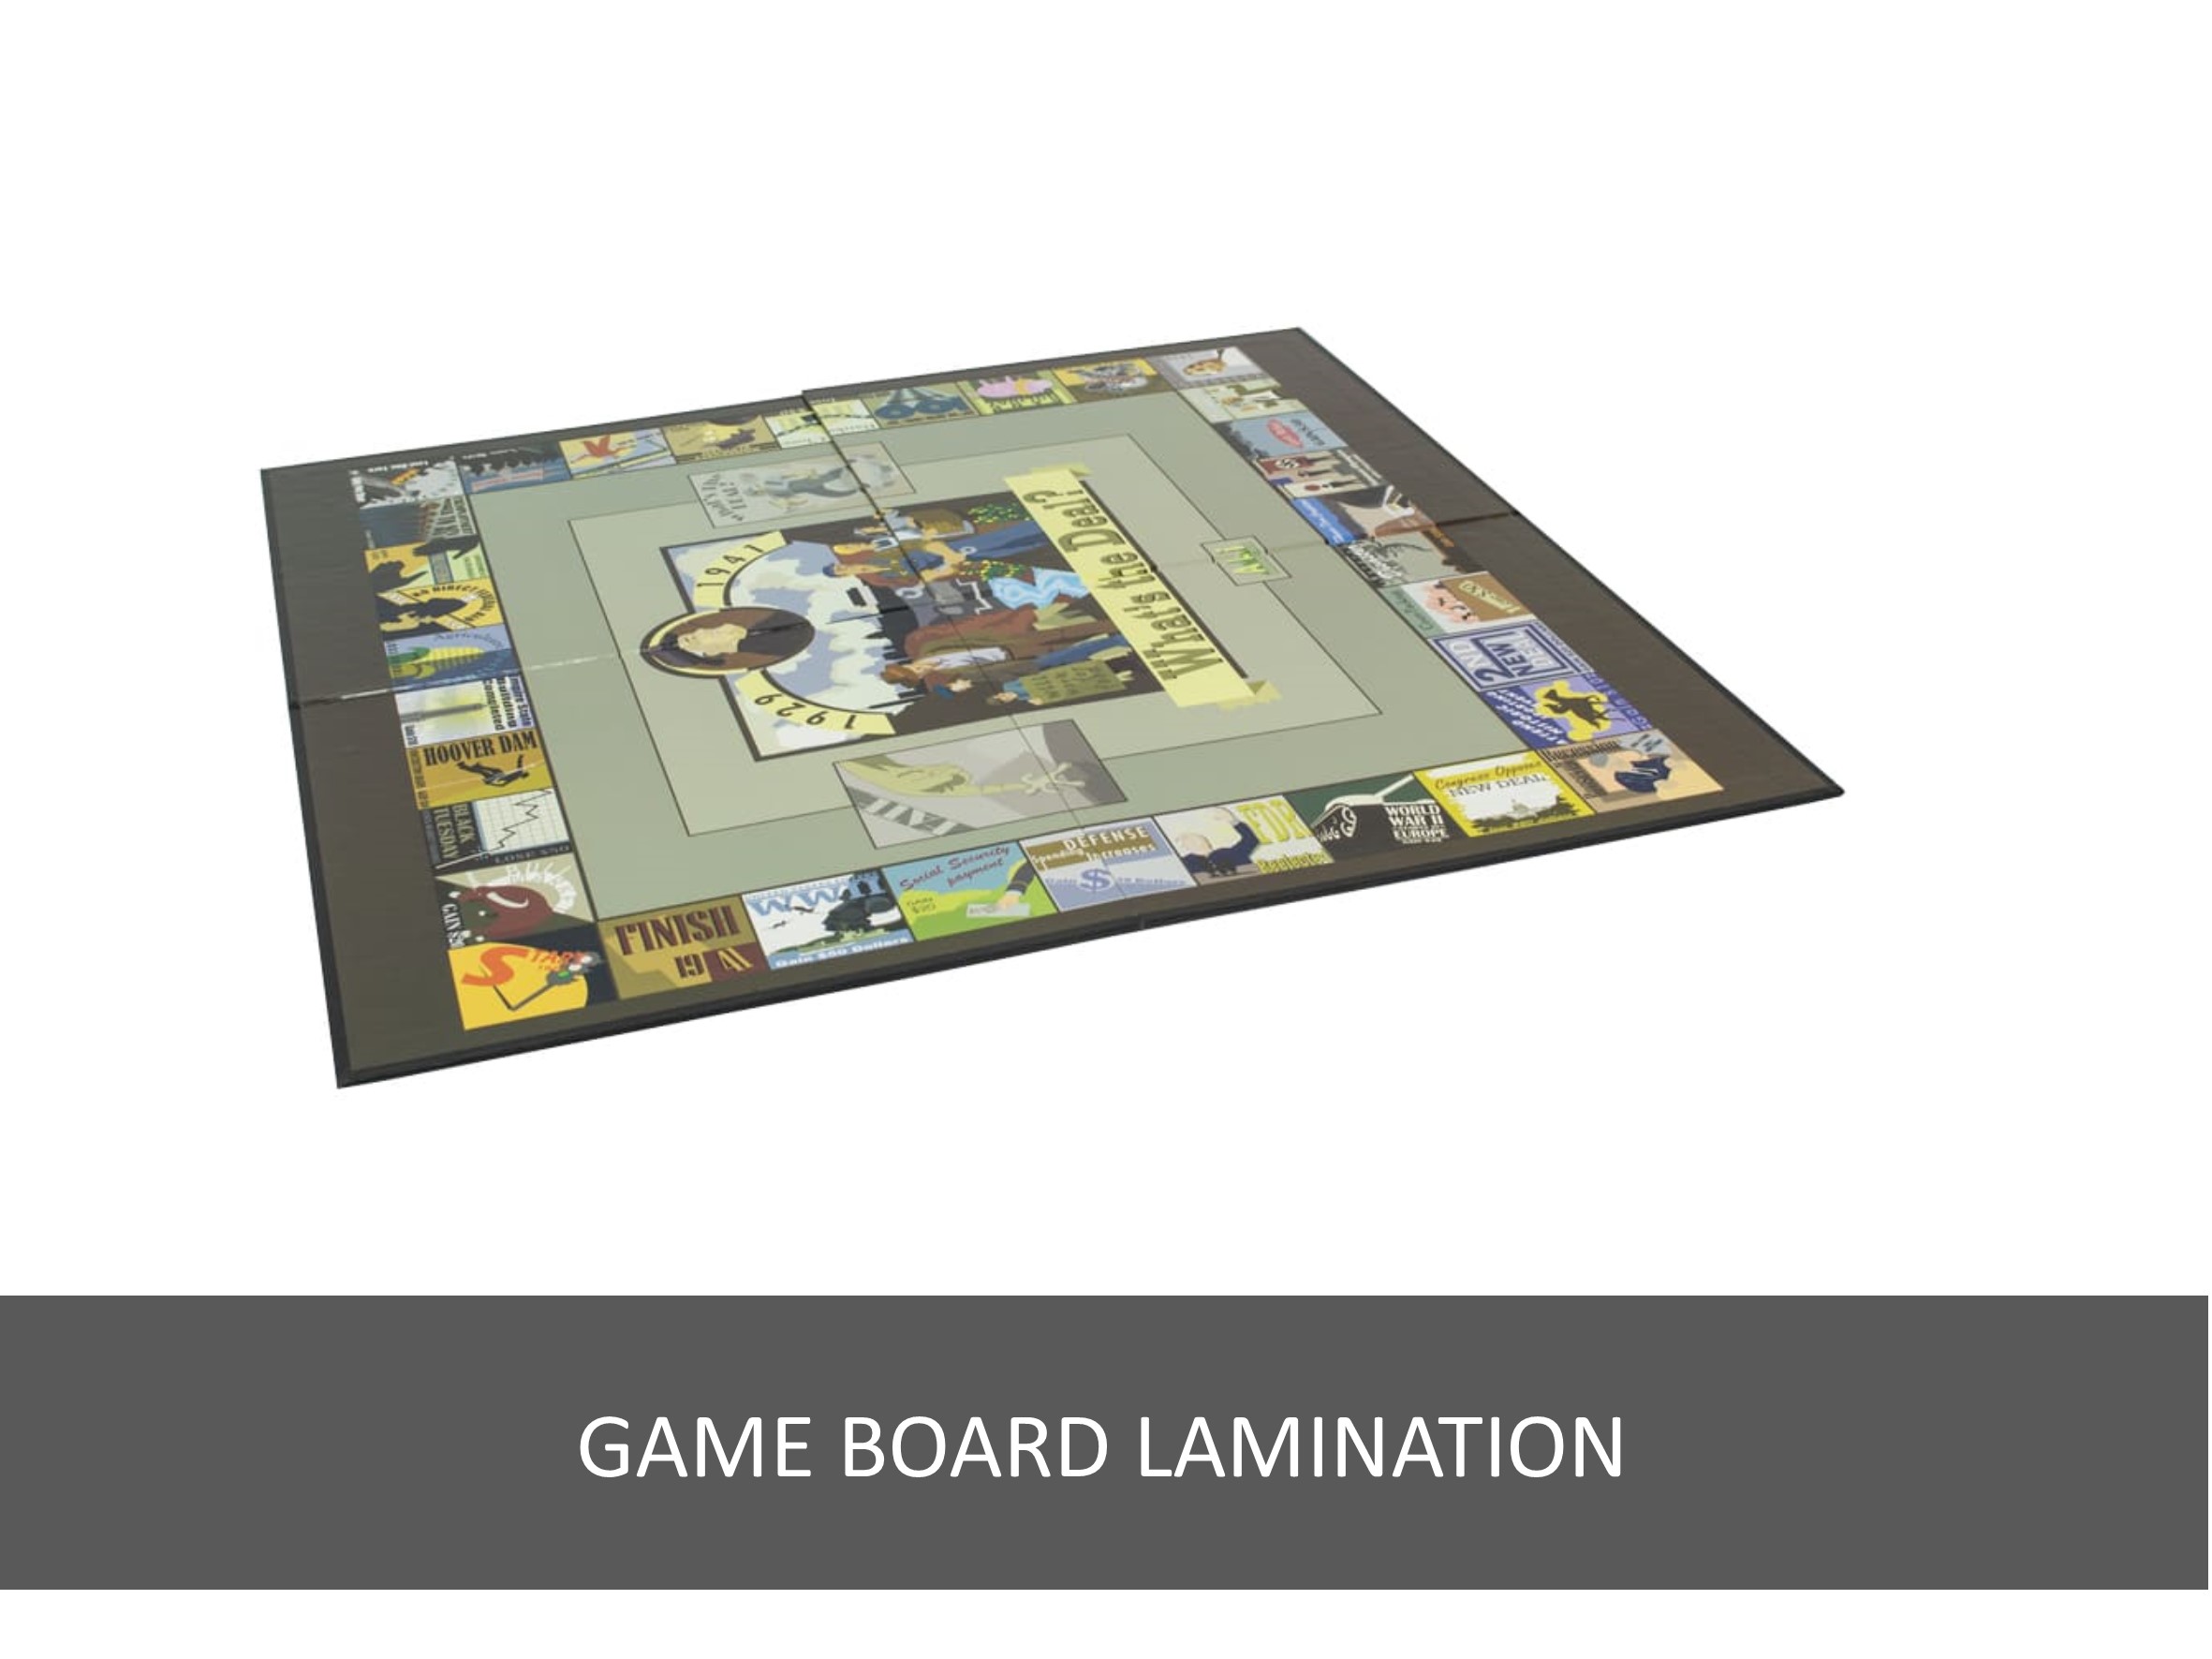 Game board lamination